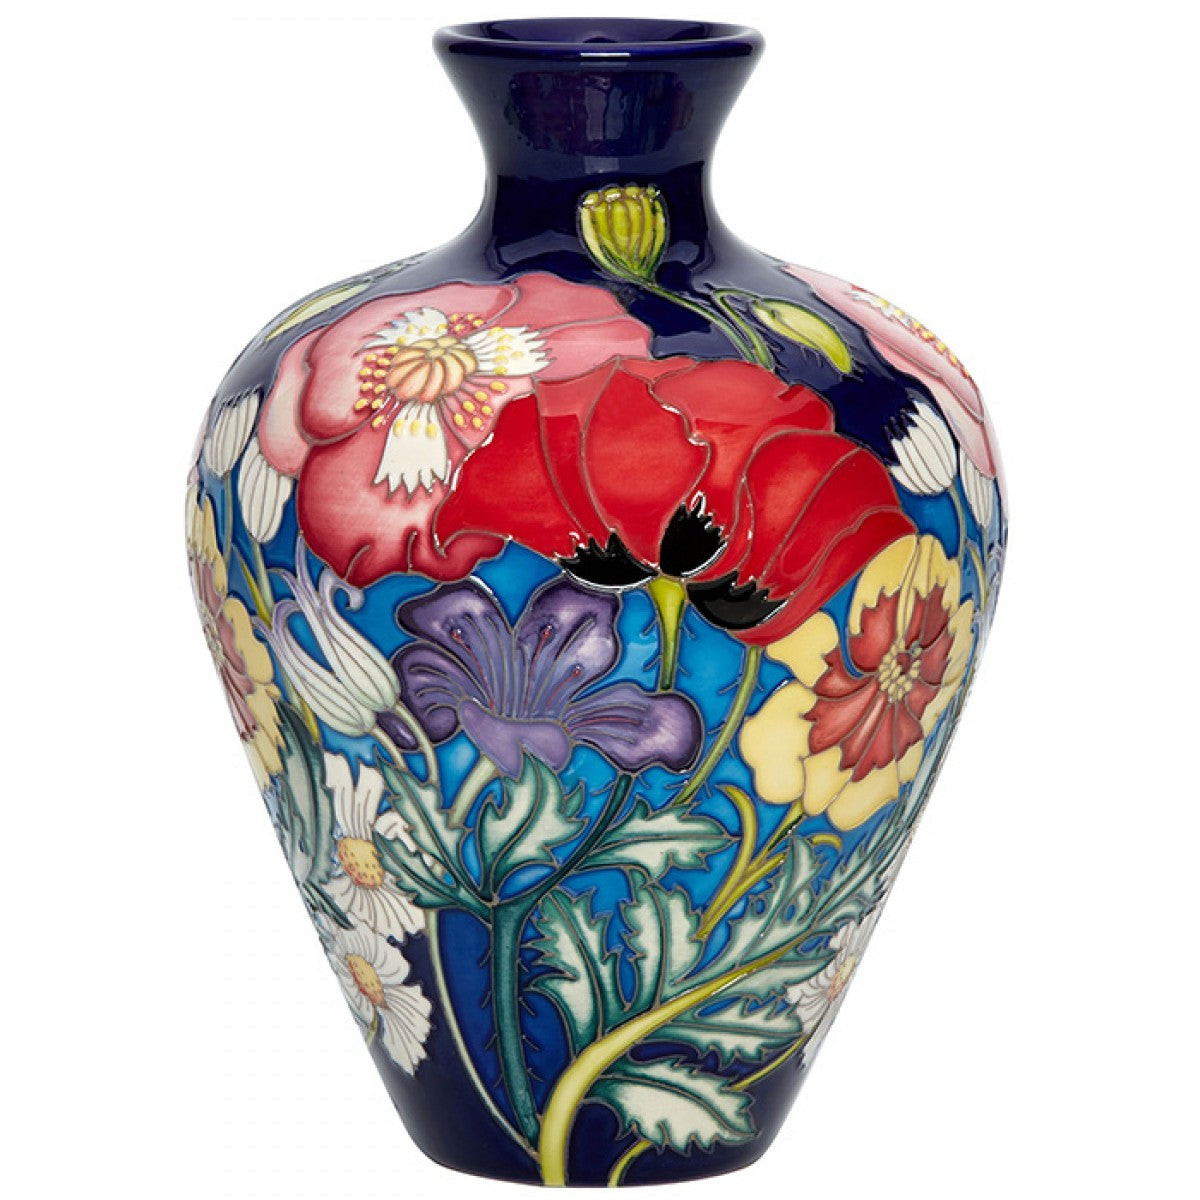 Superbloom Vase 03/7 Limited Edition